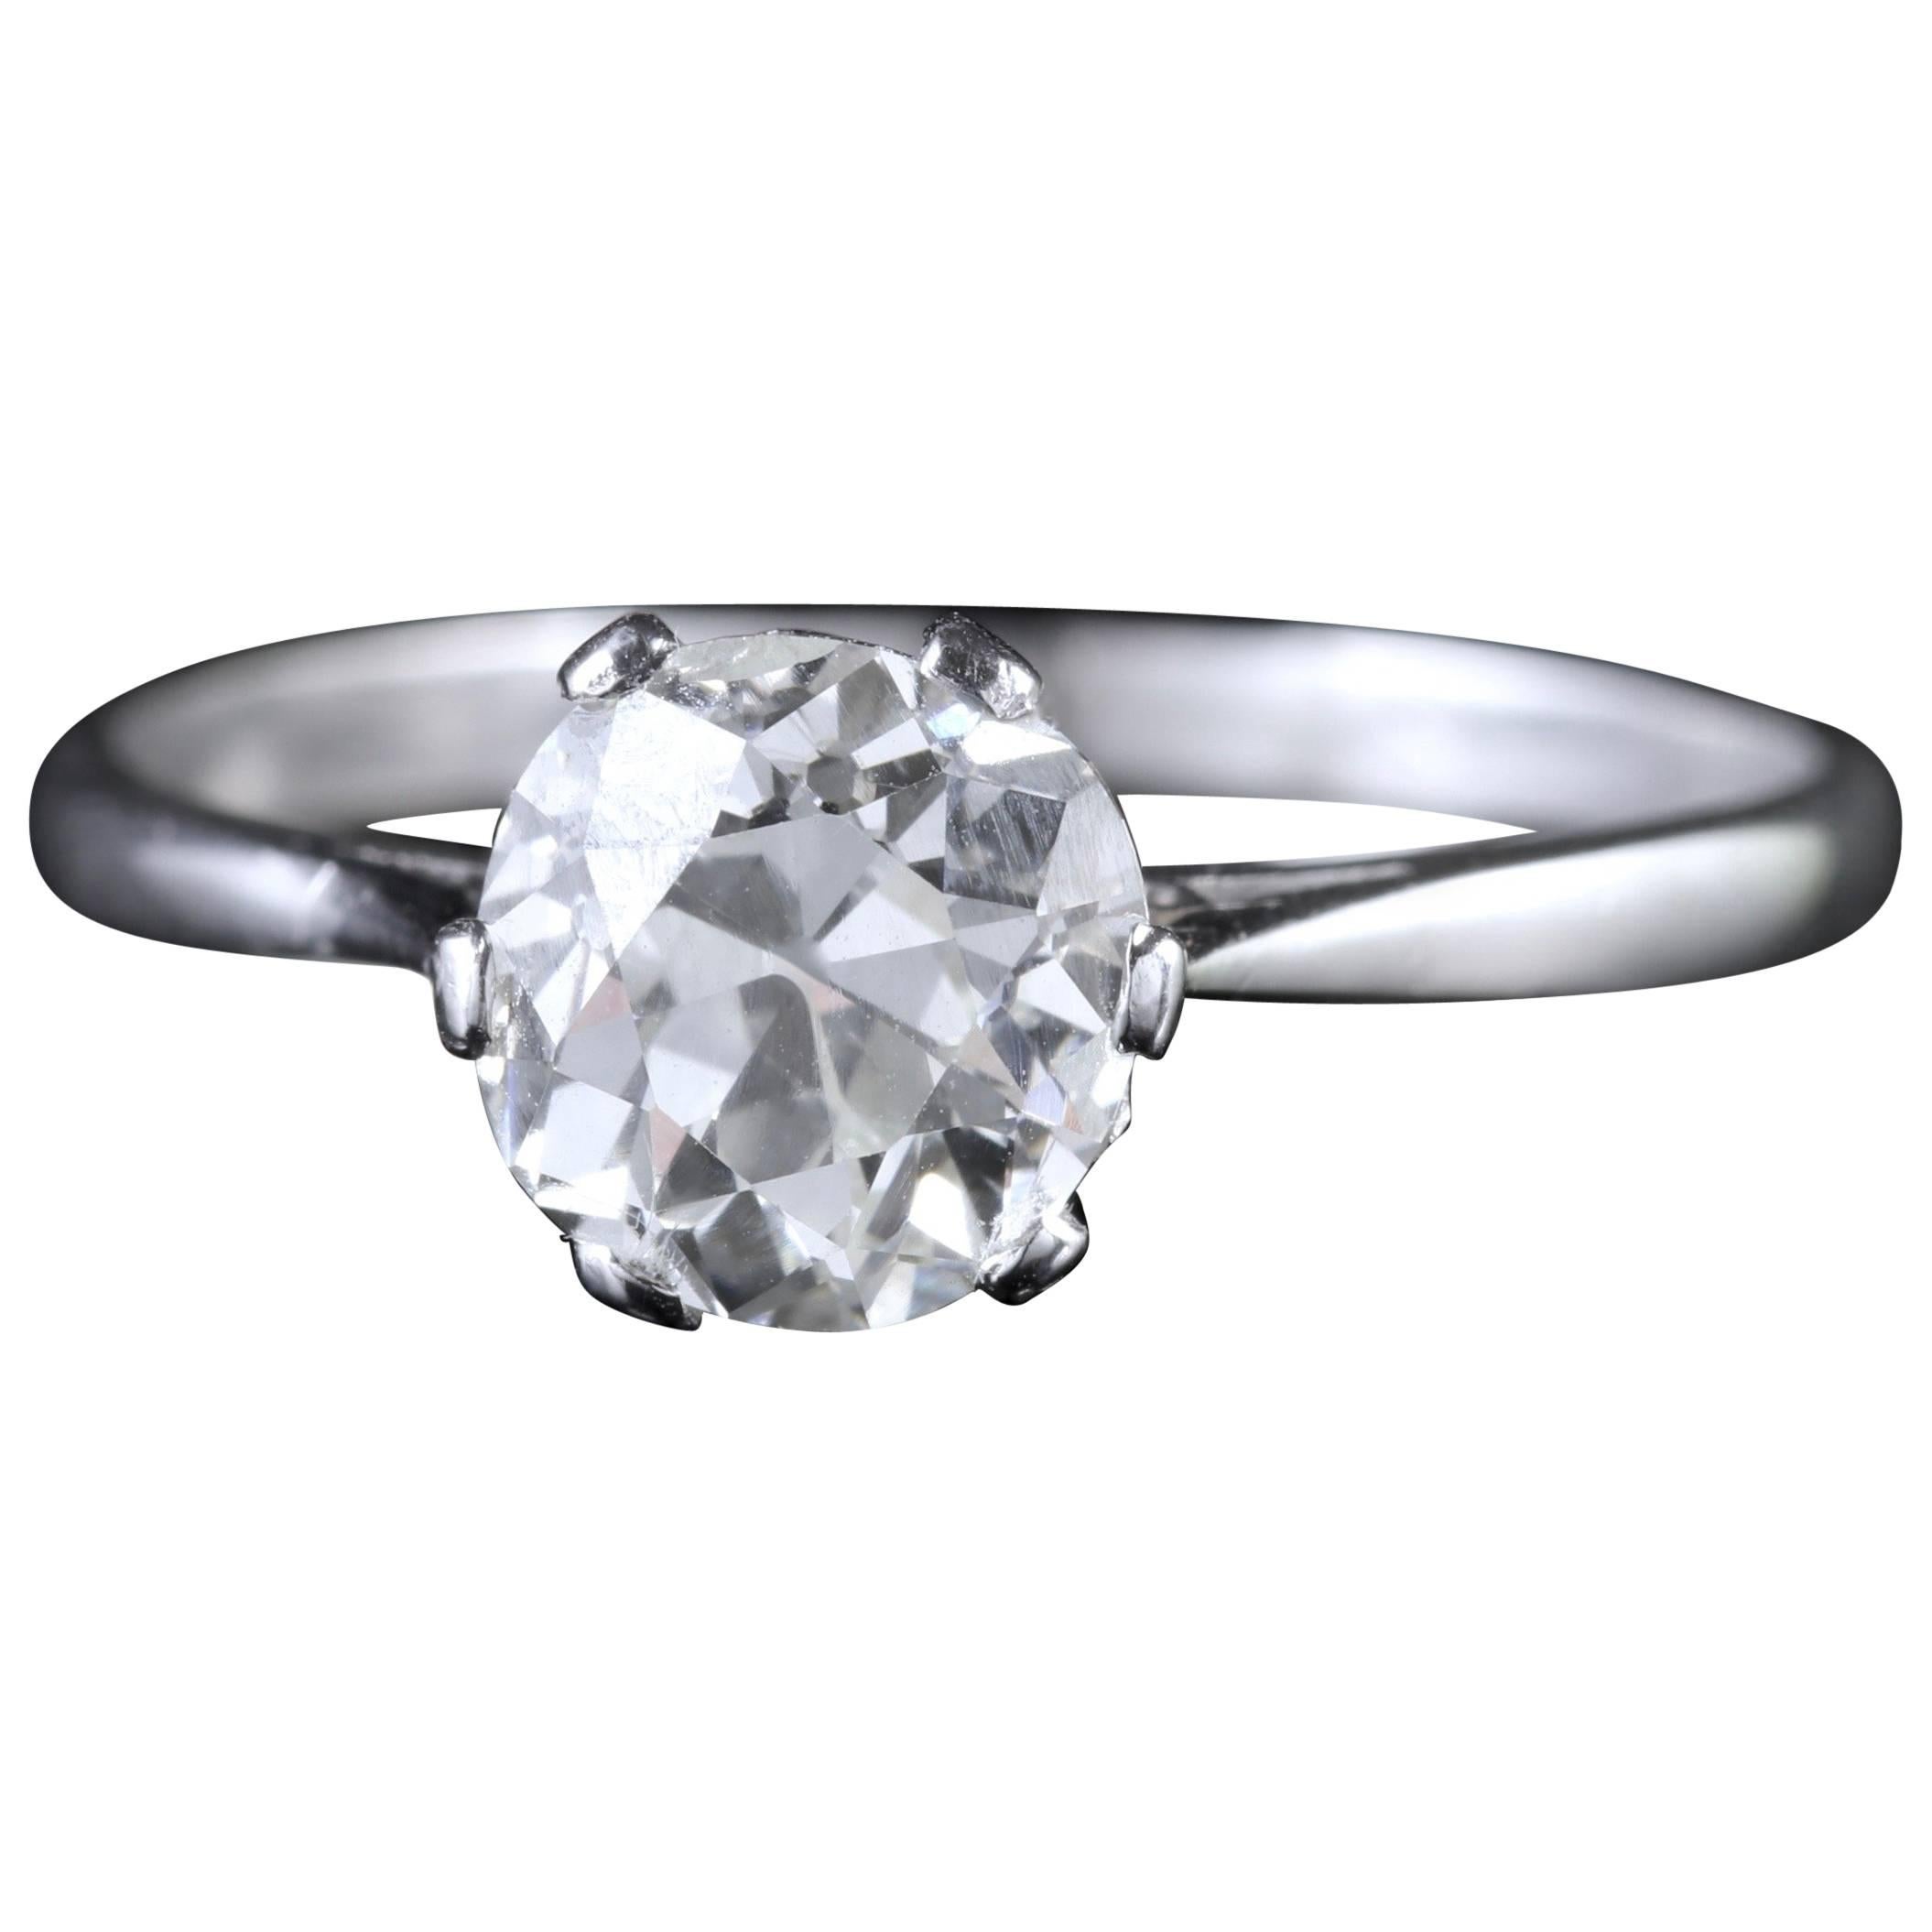 Antique Edwardian 1.45 Carat Diamond Solitaire Engagement Ring, circa 1910